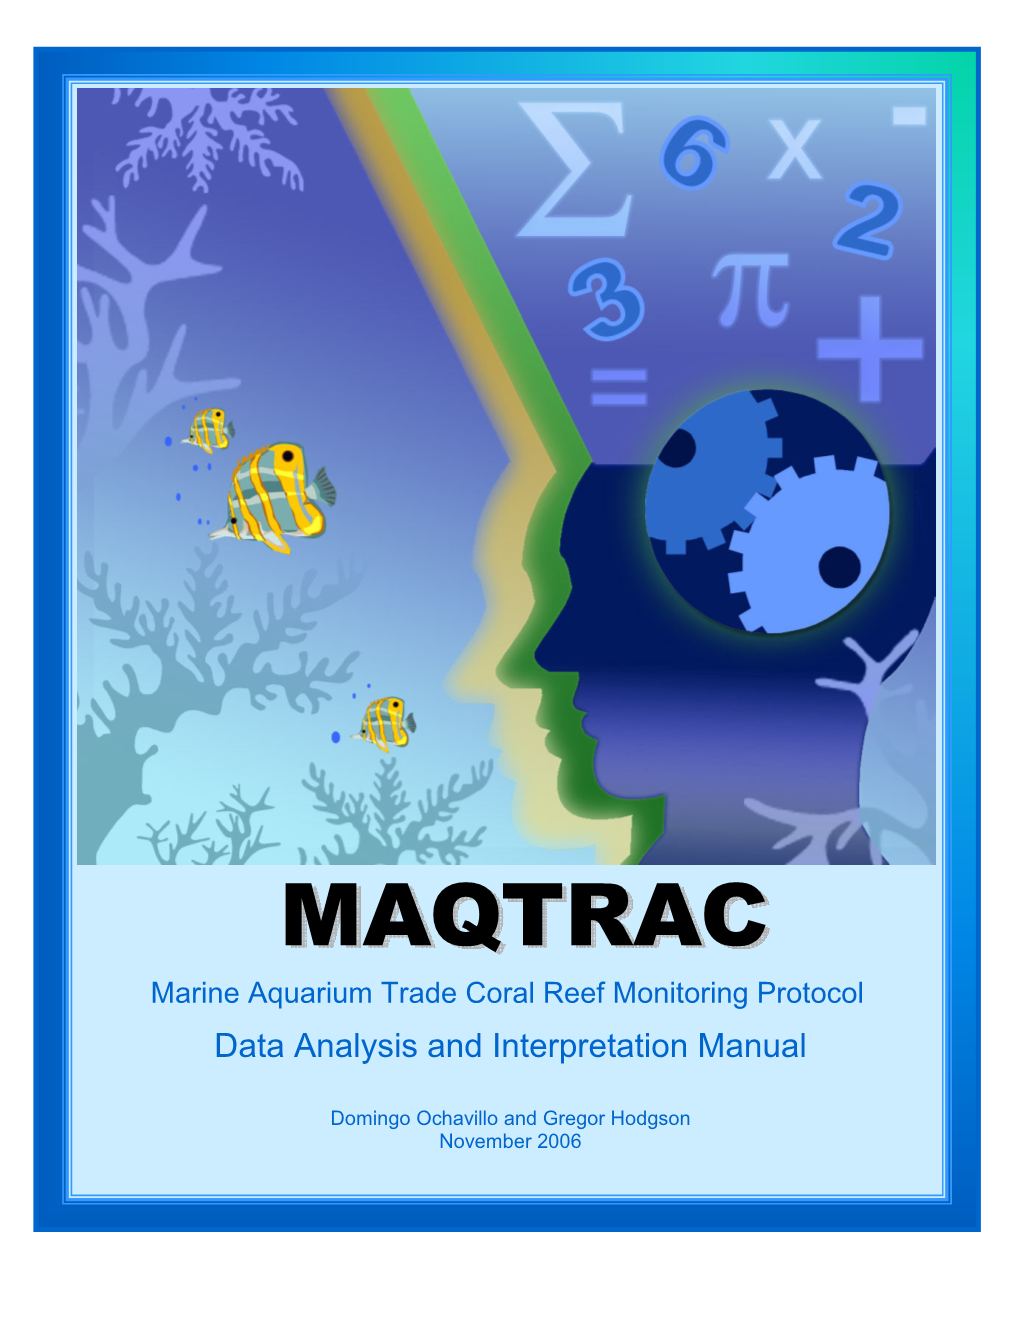 Data Analysis and Interpretation Manual